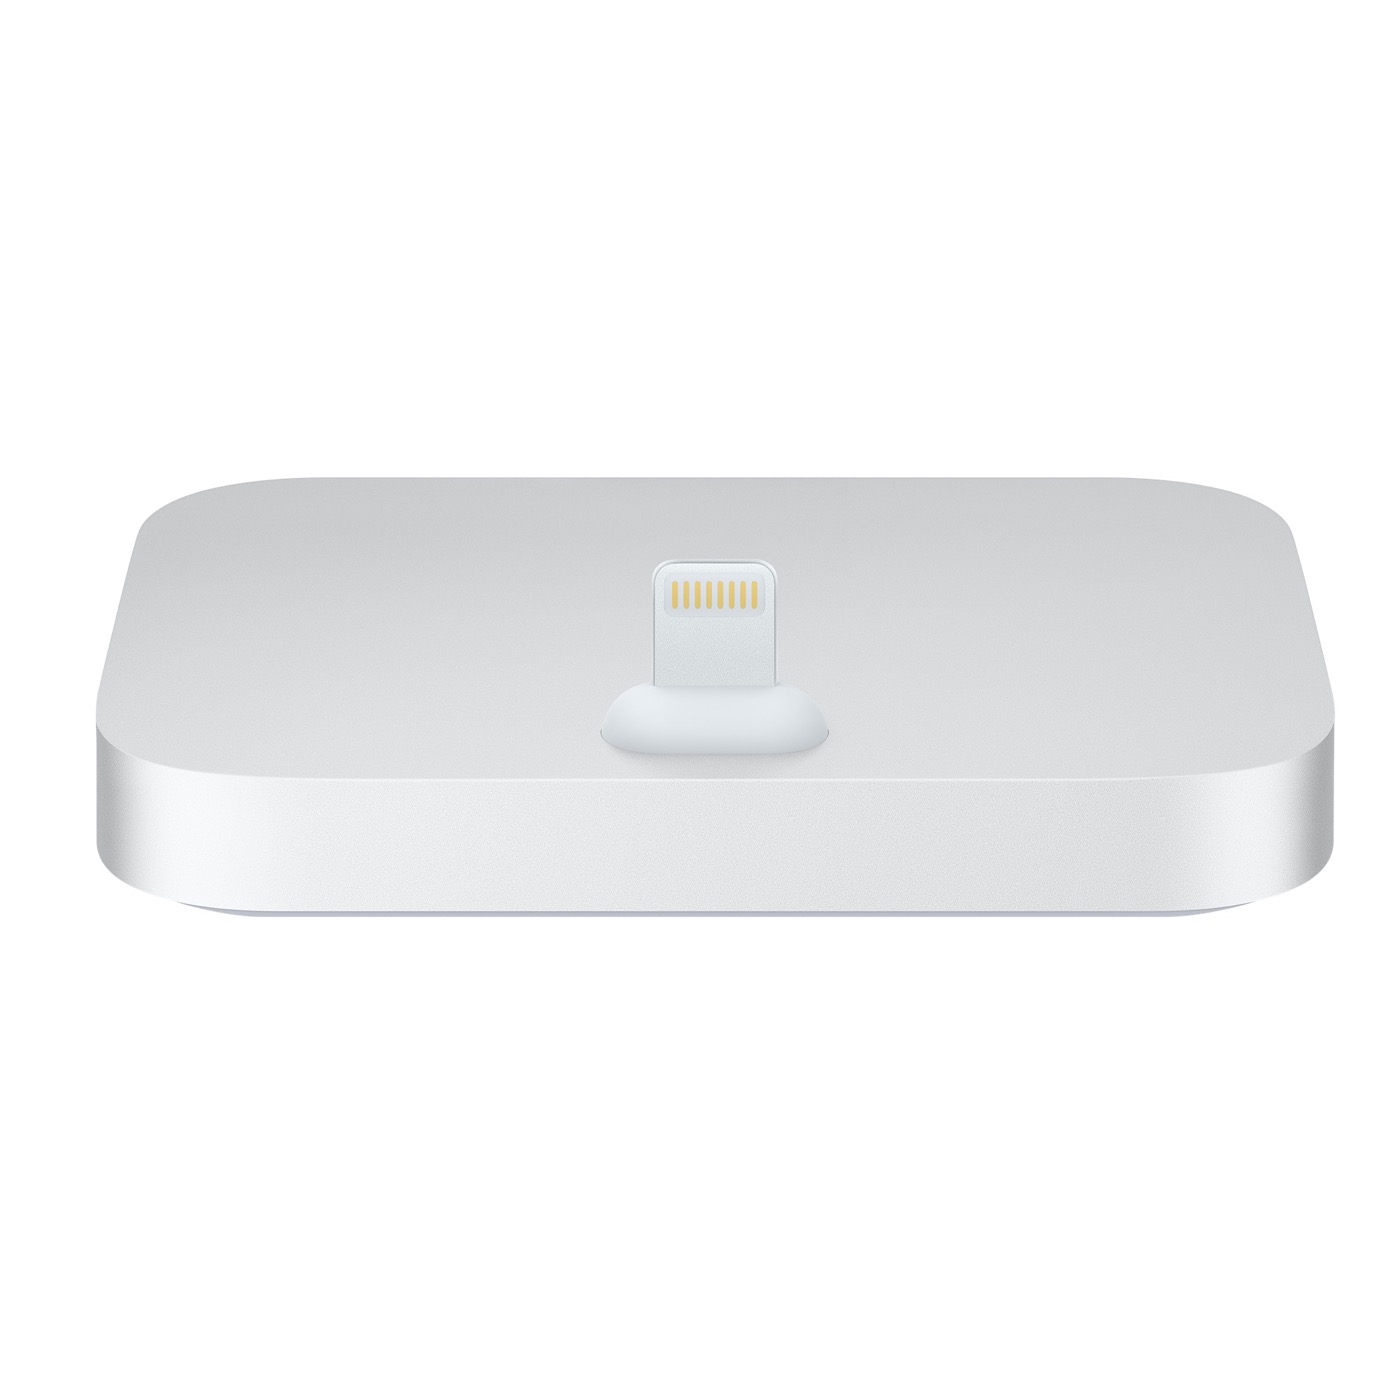 Apple、｢iPhone Lightning Dock｣の販売を開始